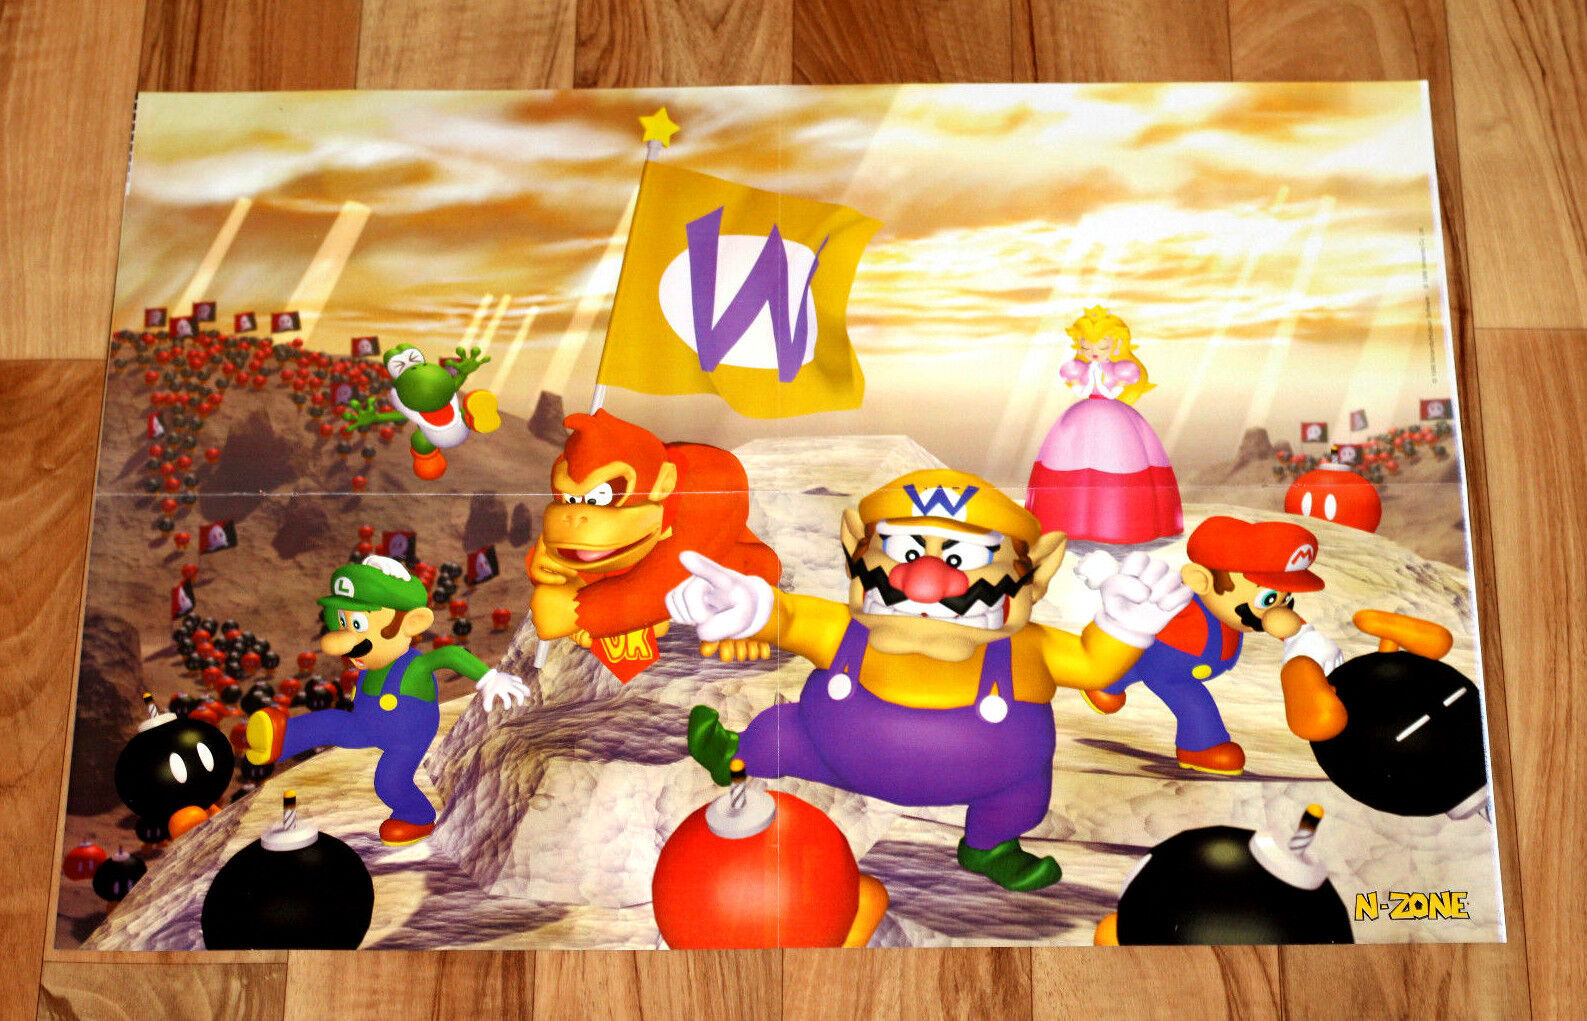 1998 Nintendo Wario Mario Donkey Kong Luigi Yoshi Zelda Very Rare Poster 58x42cm Tanie popularne